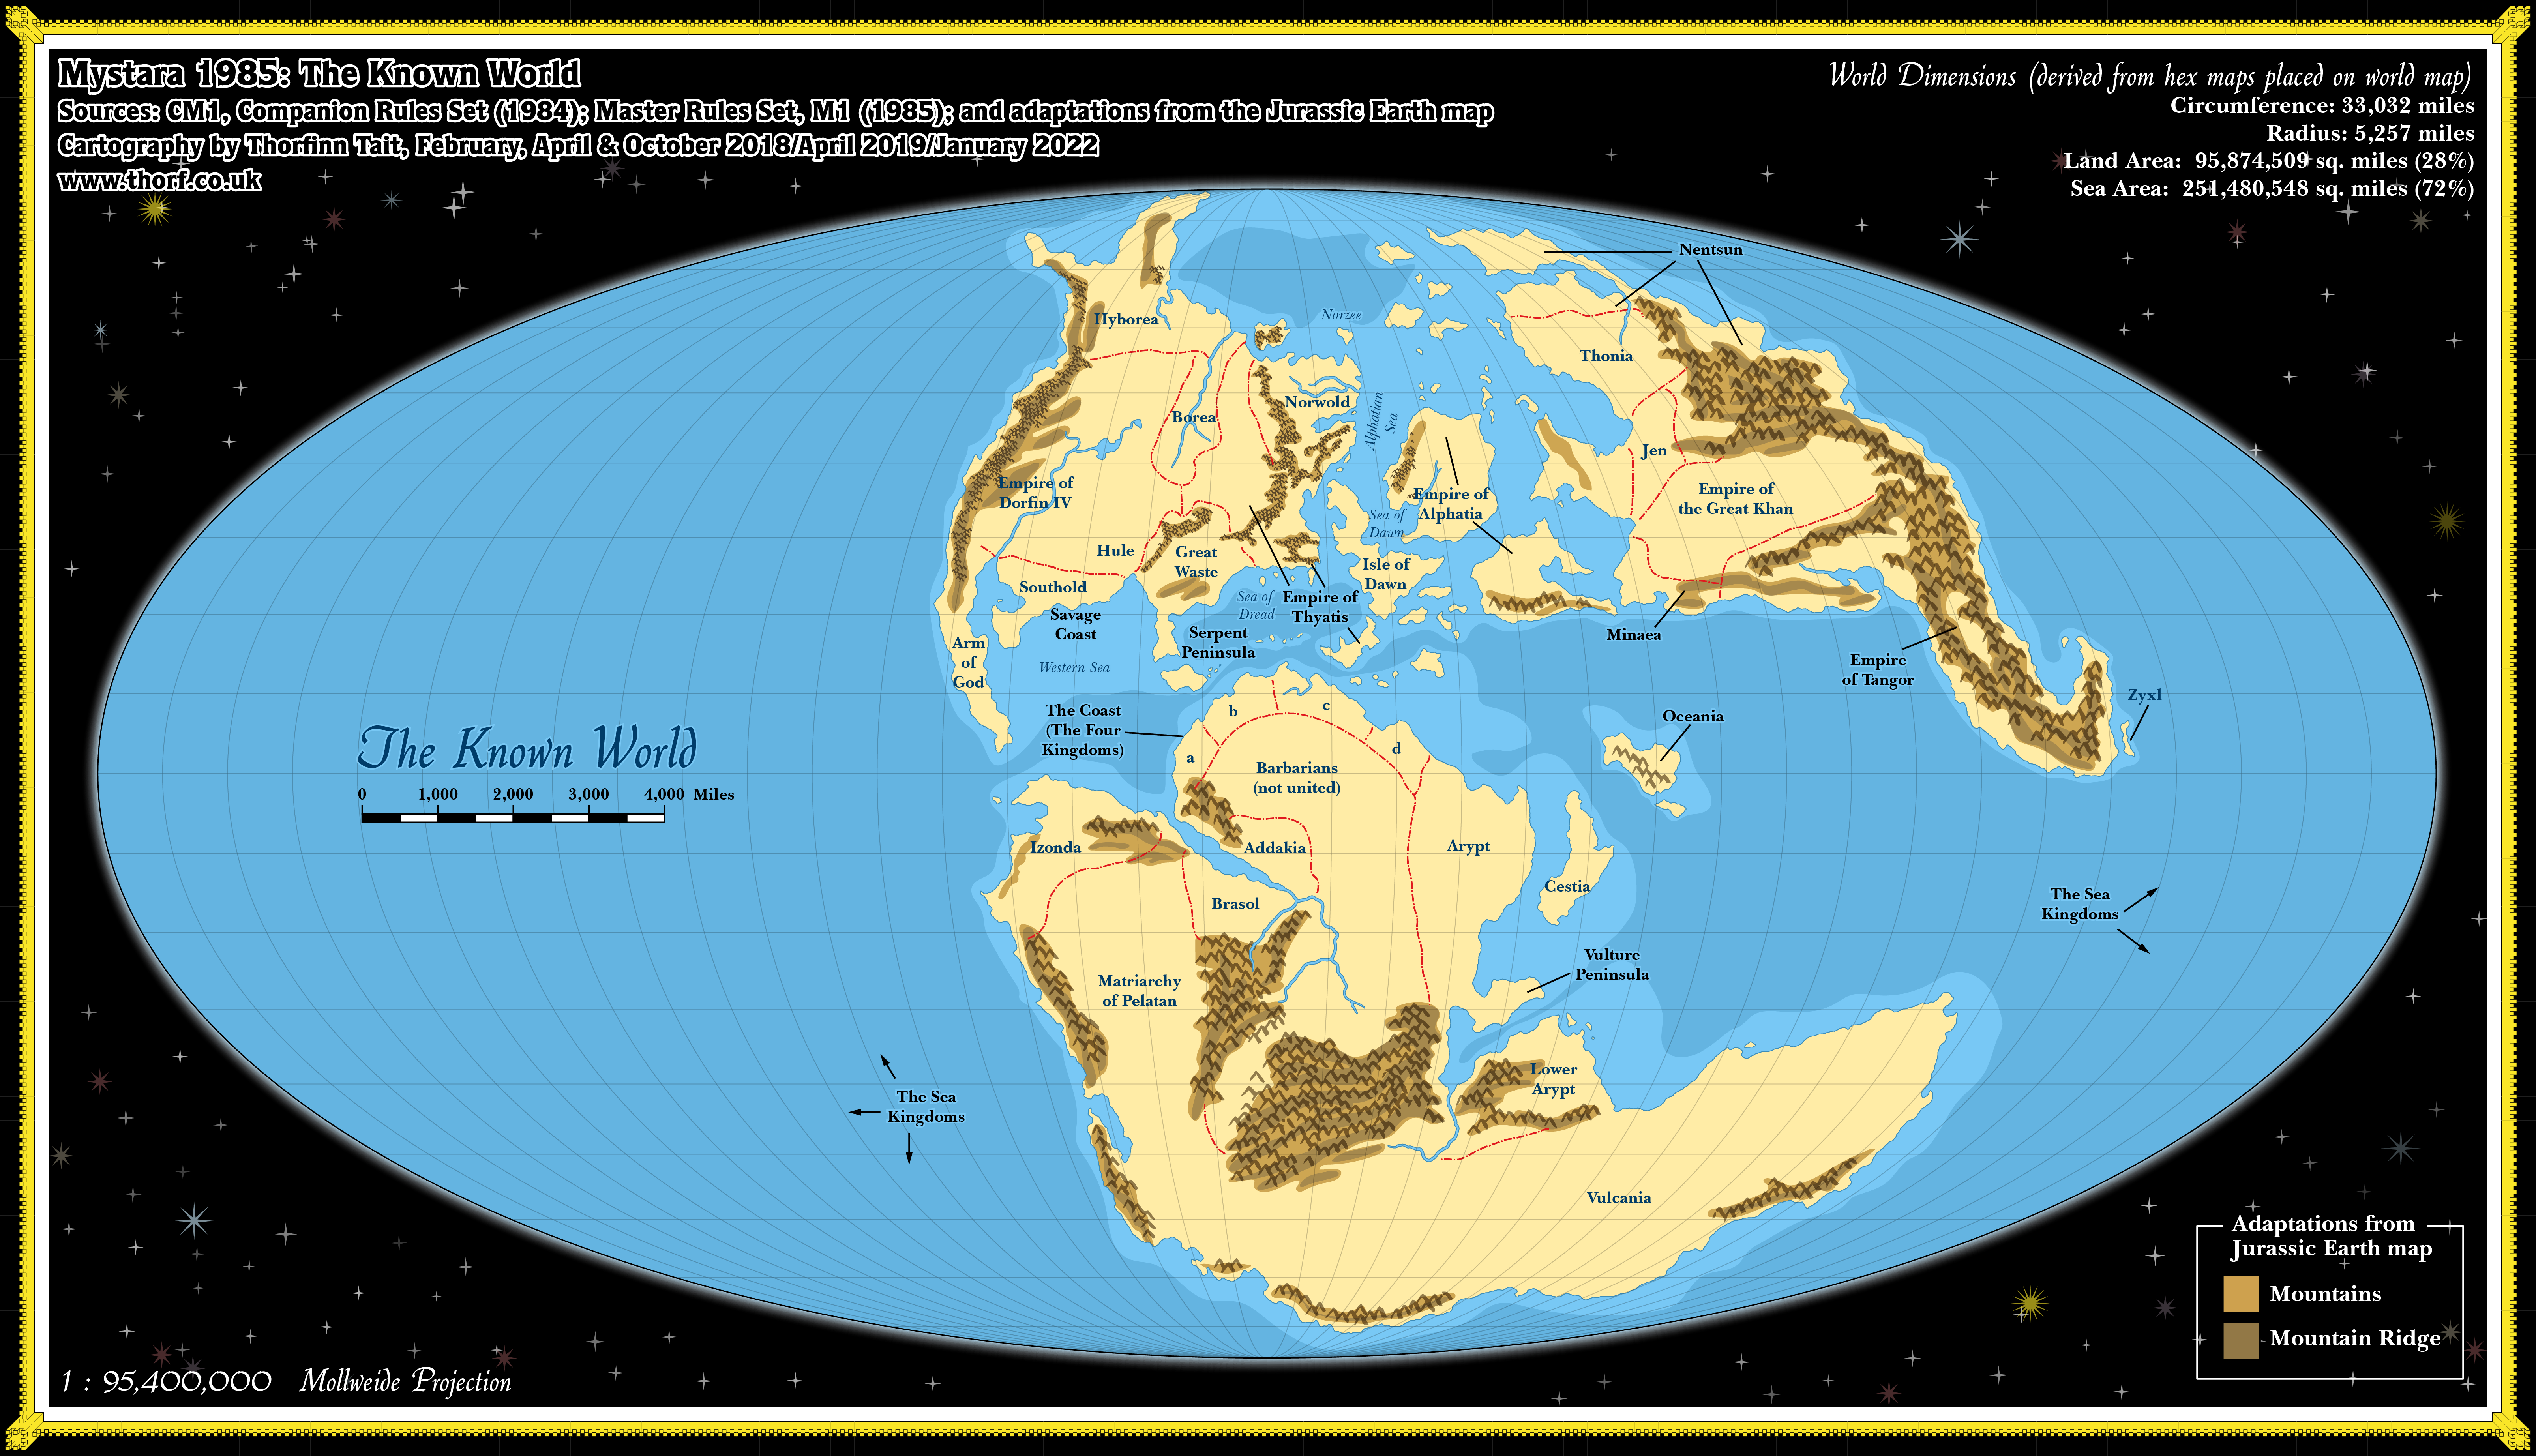 world map 2022